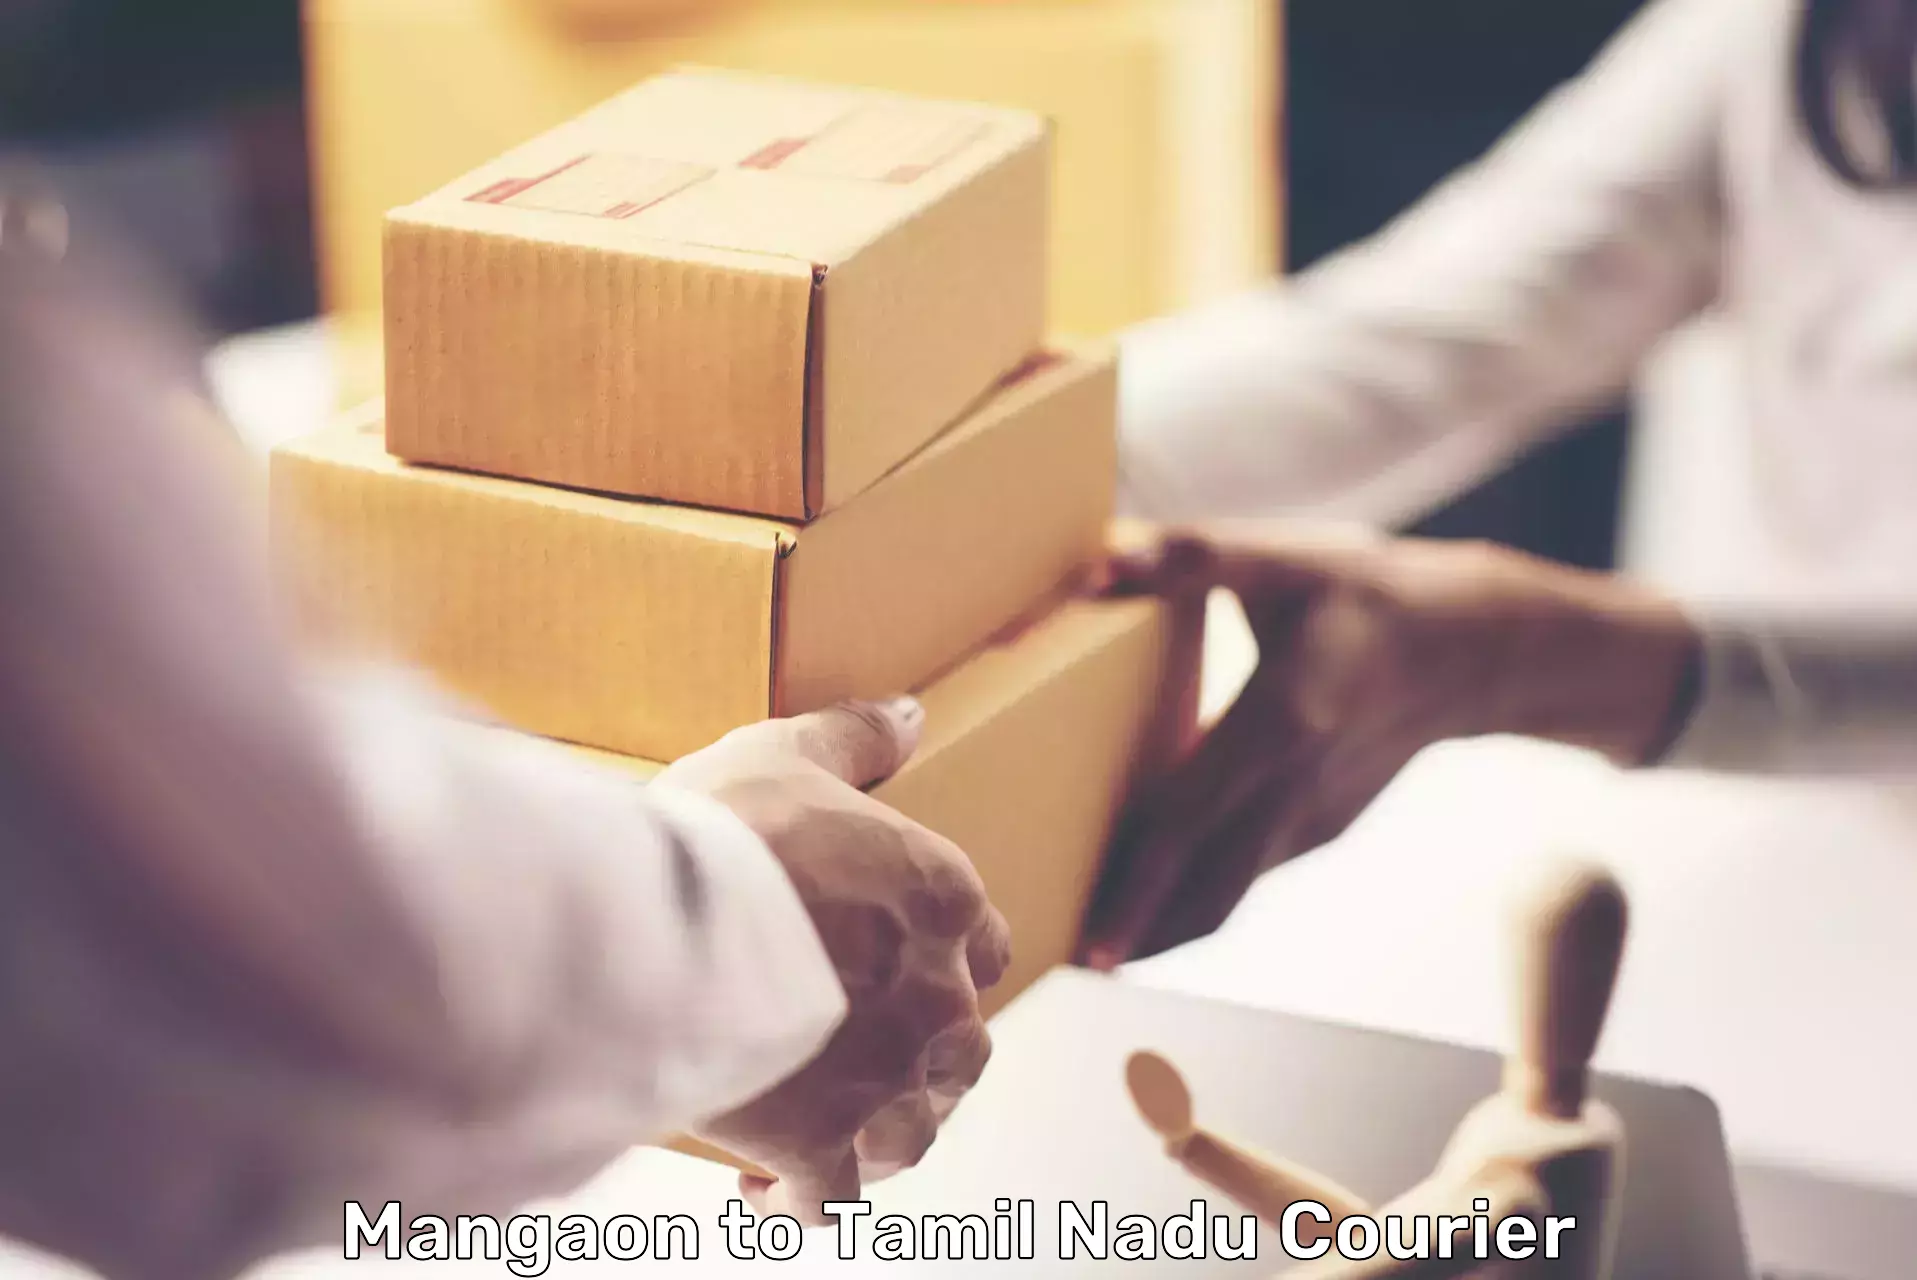 Professional courier handling Mangaon to Palani